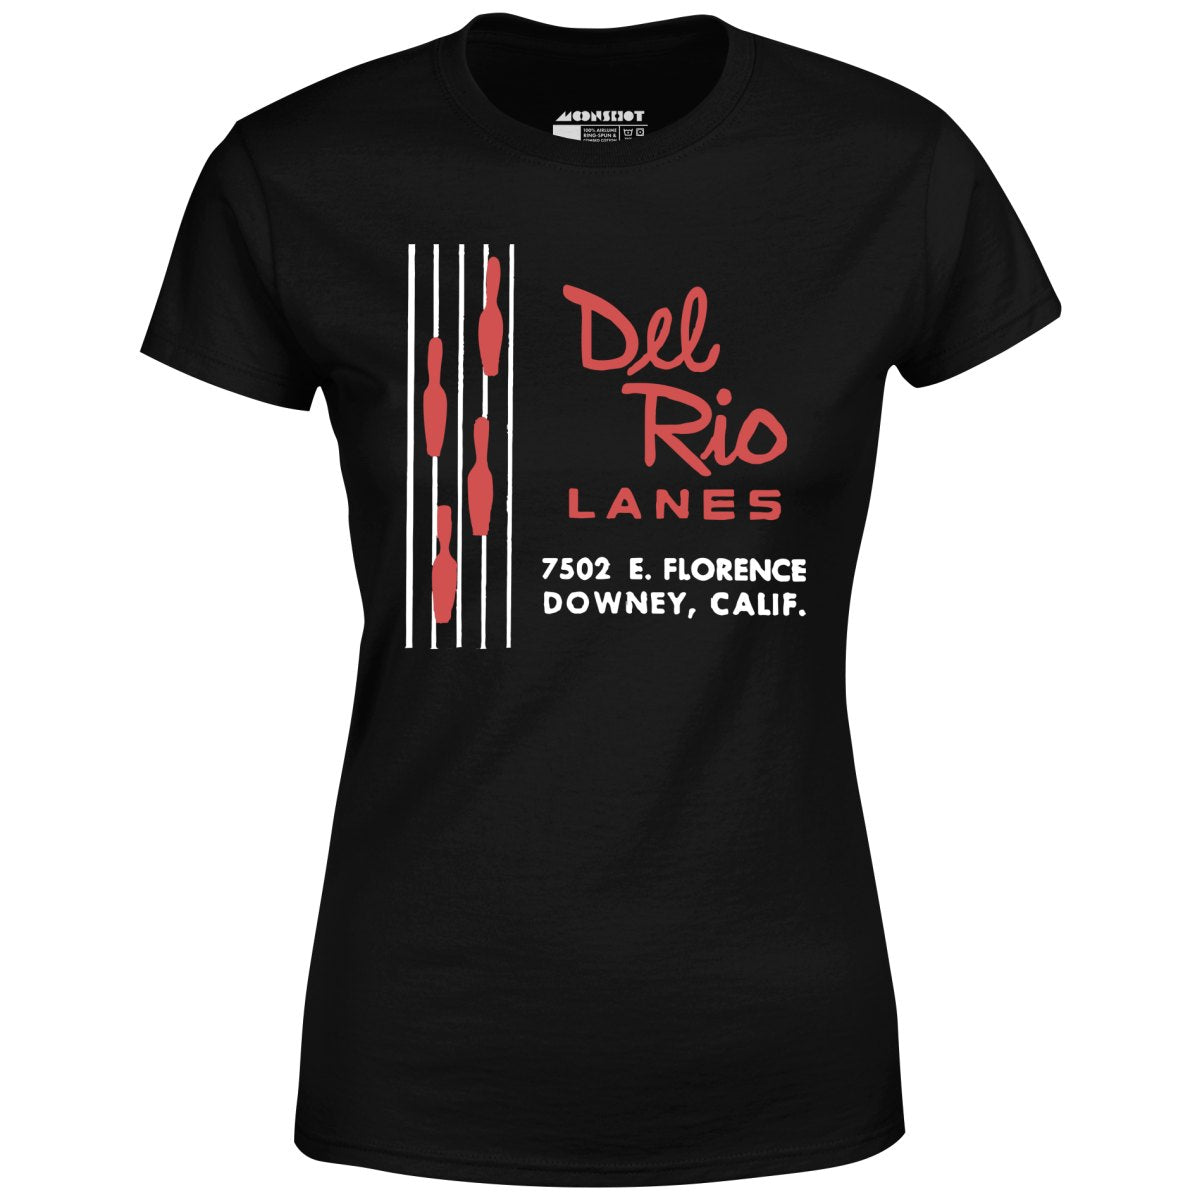 Del Rio Lanes - Downey, CA - Vintage Bowling Alley - Women's T-Shirt